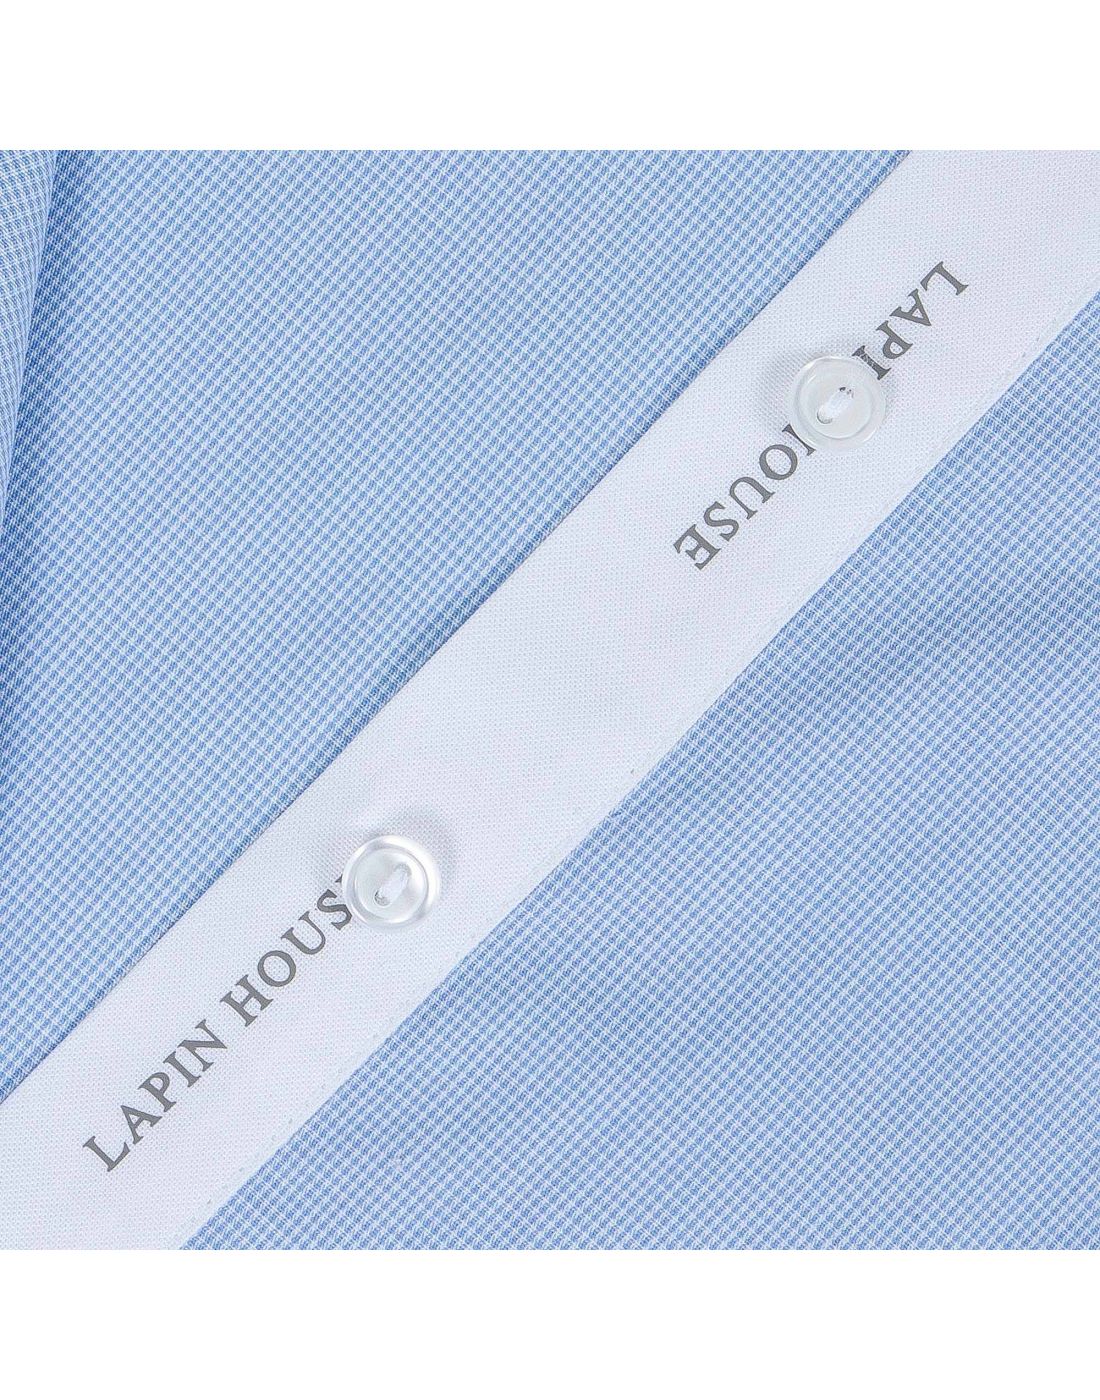 Lapin House Boys Shirt